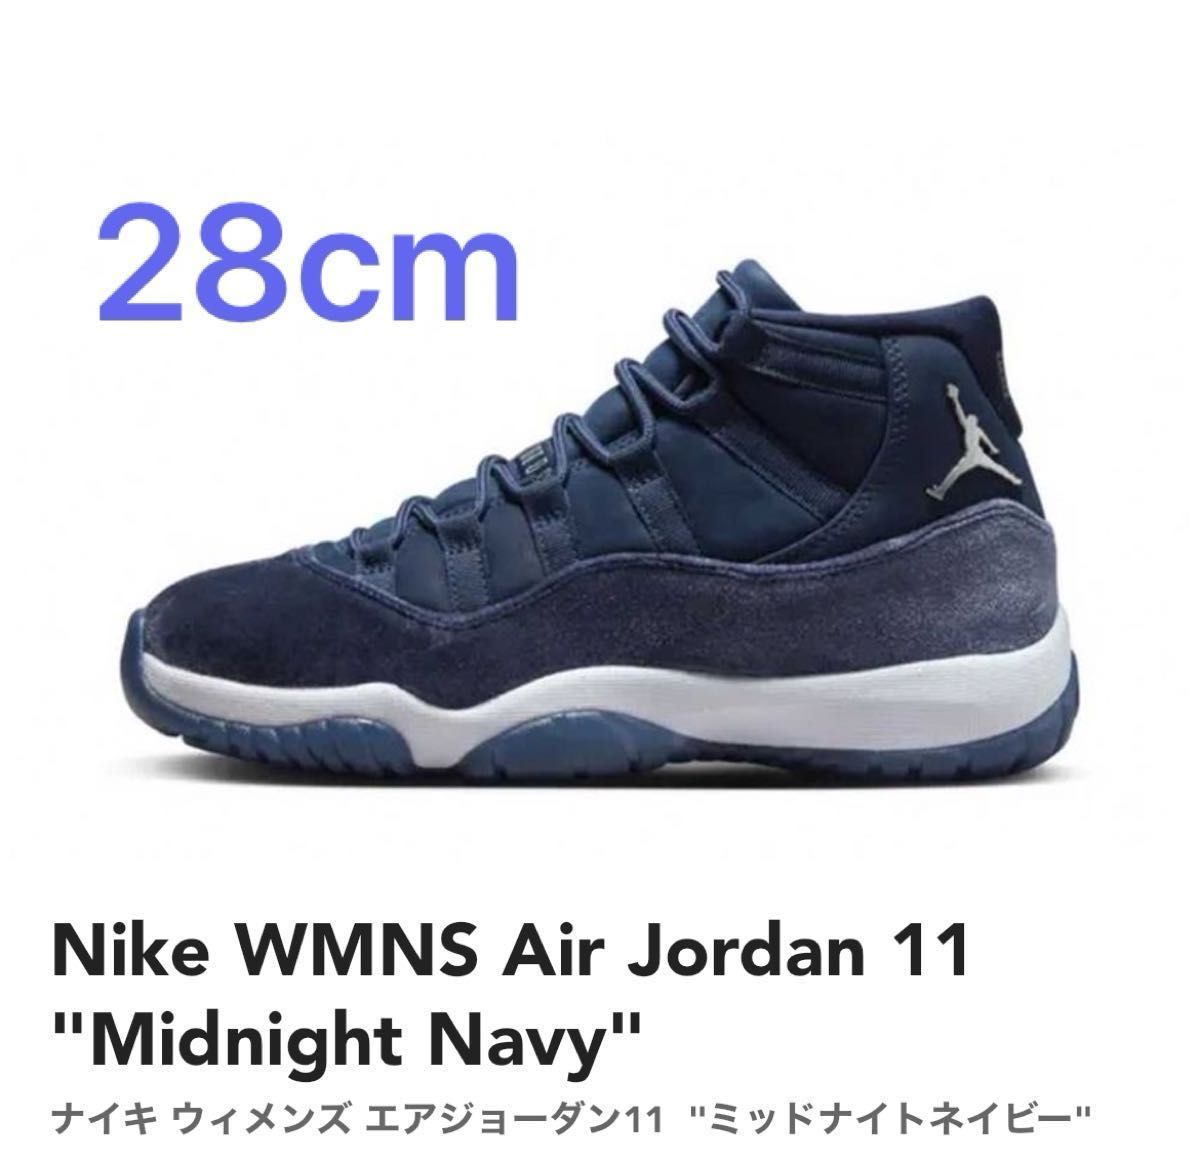 Nike WMNS Air Jordan 11 "Midnight Navy" 